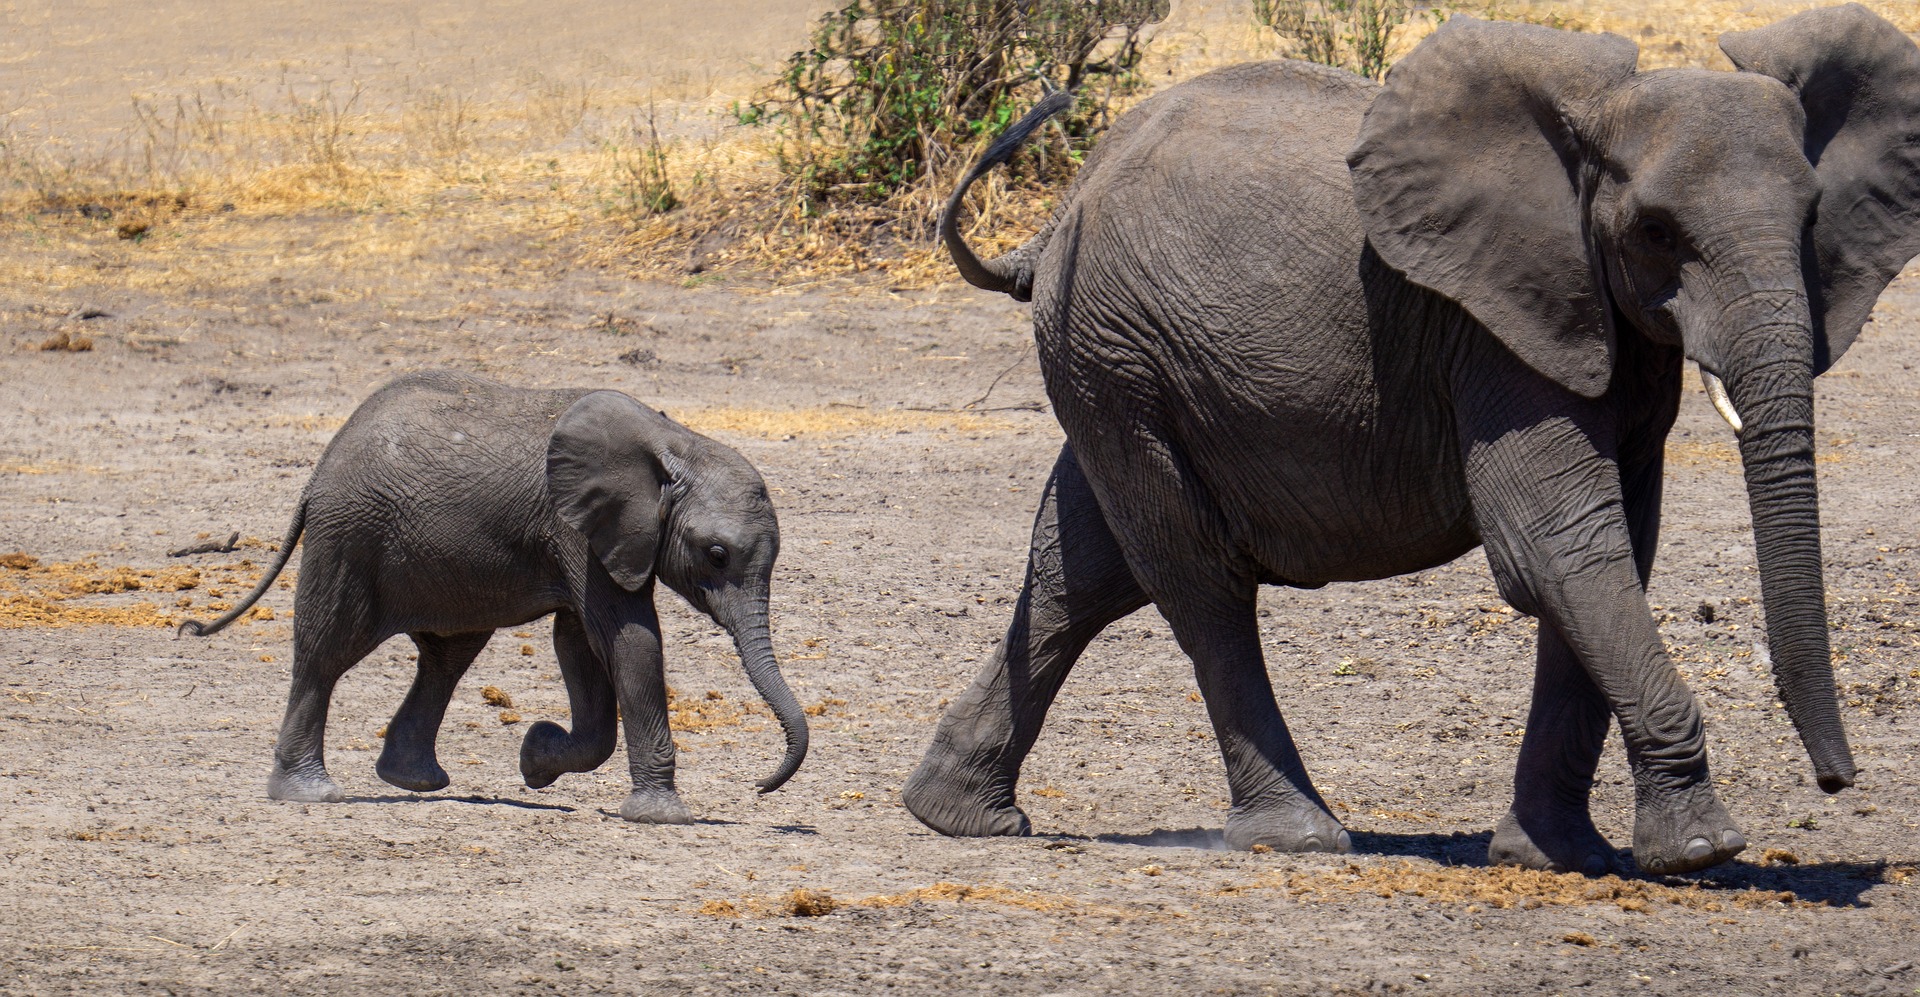 Mum with baby elephant in Tanzania